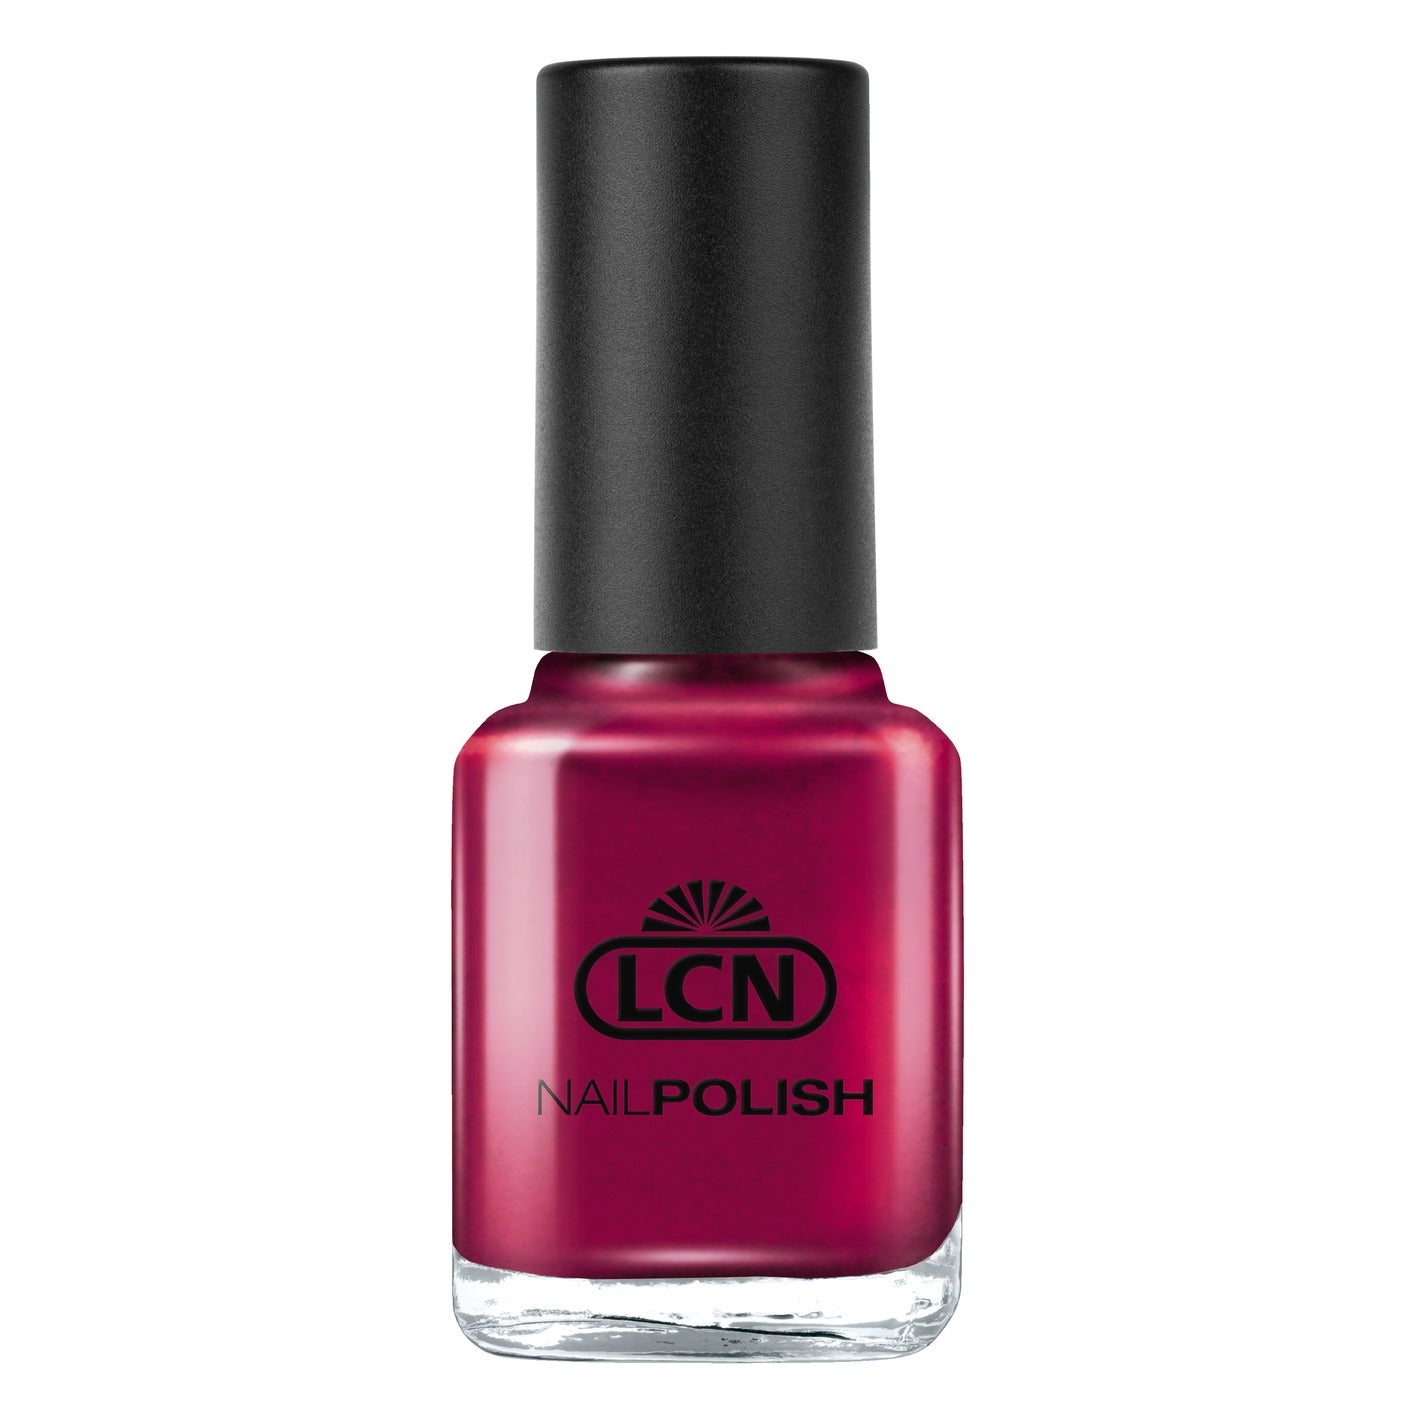 LCN Nail Polish, 336 rubin red, 8ml